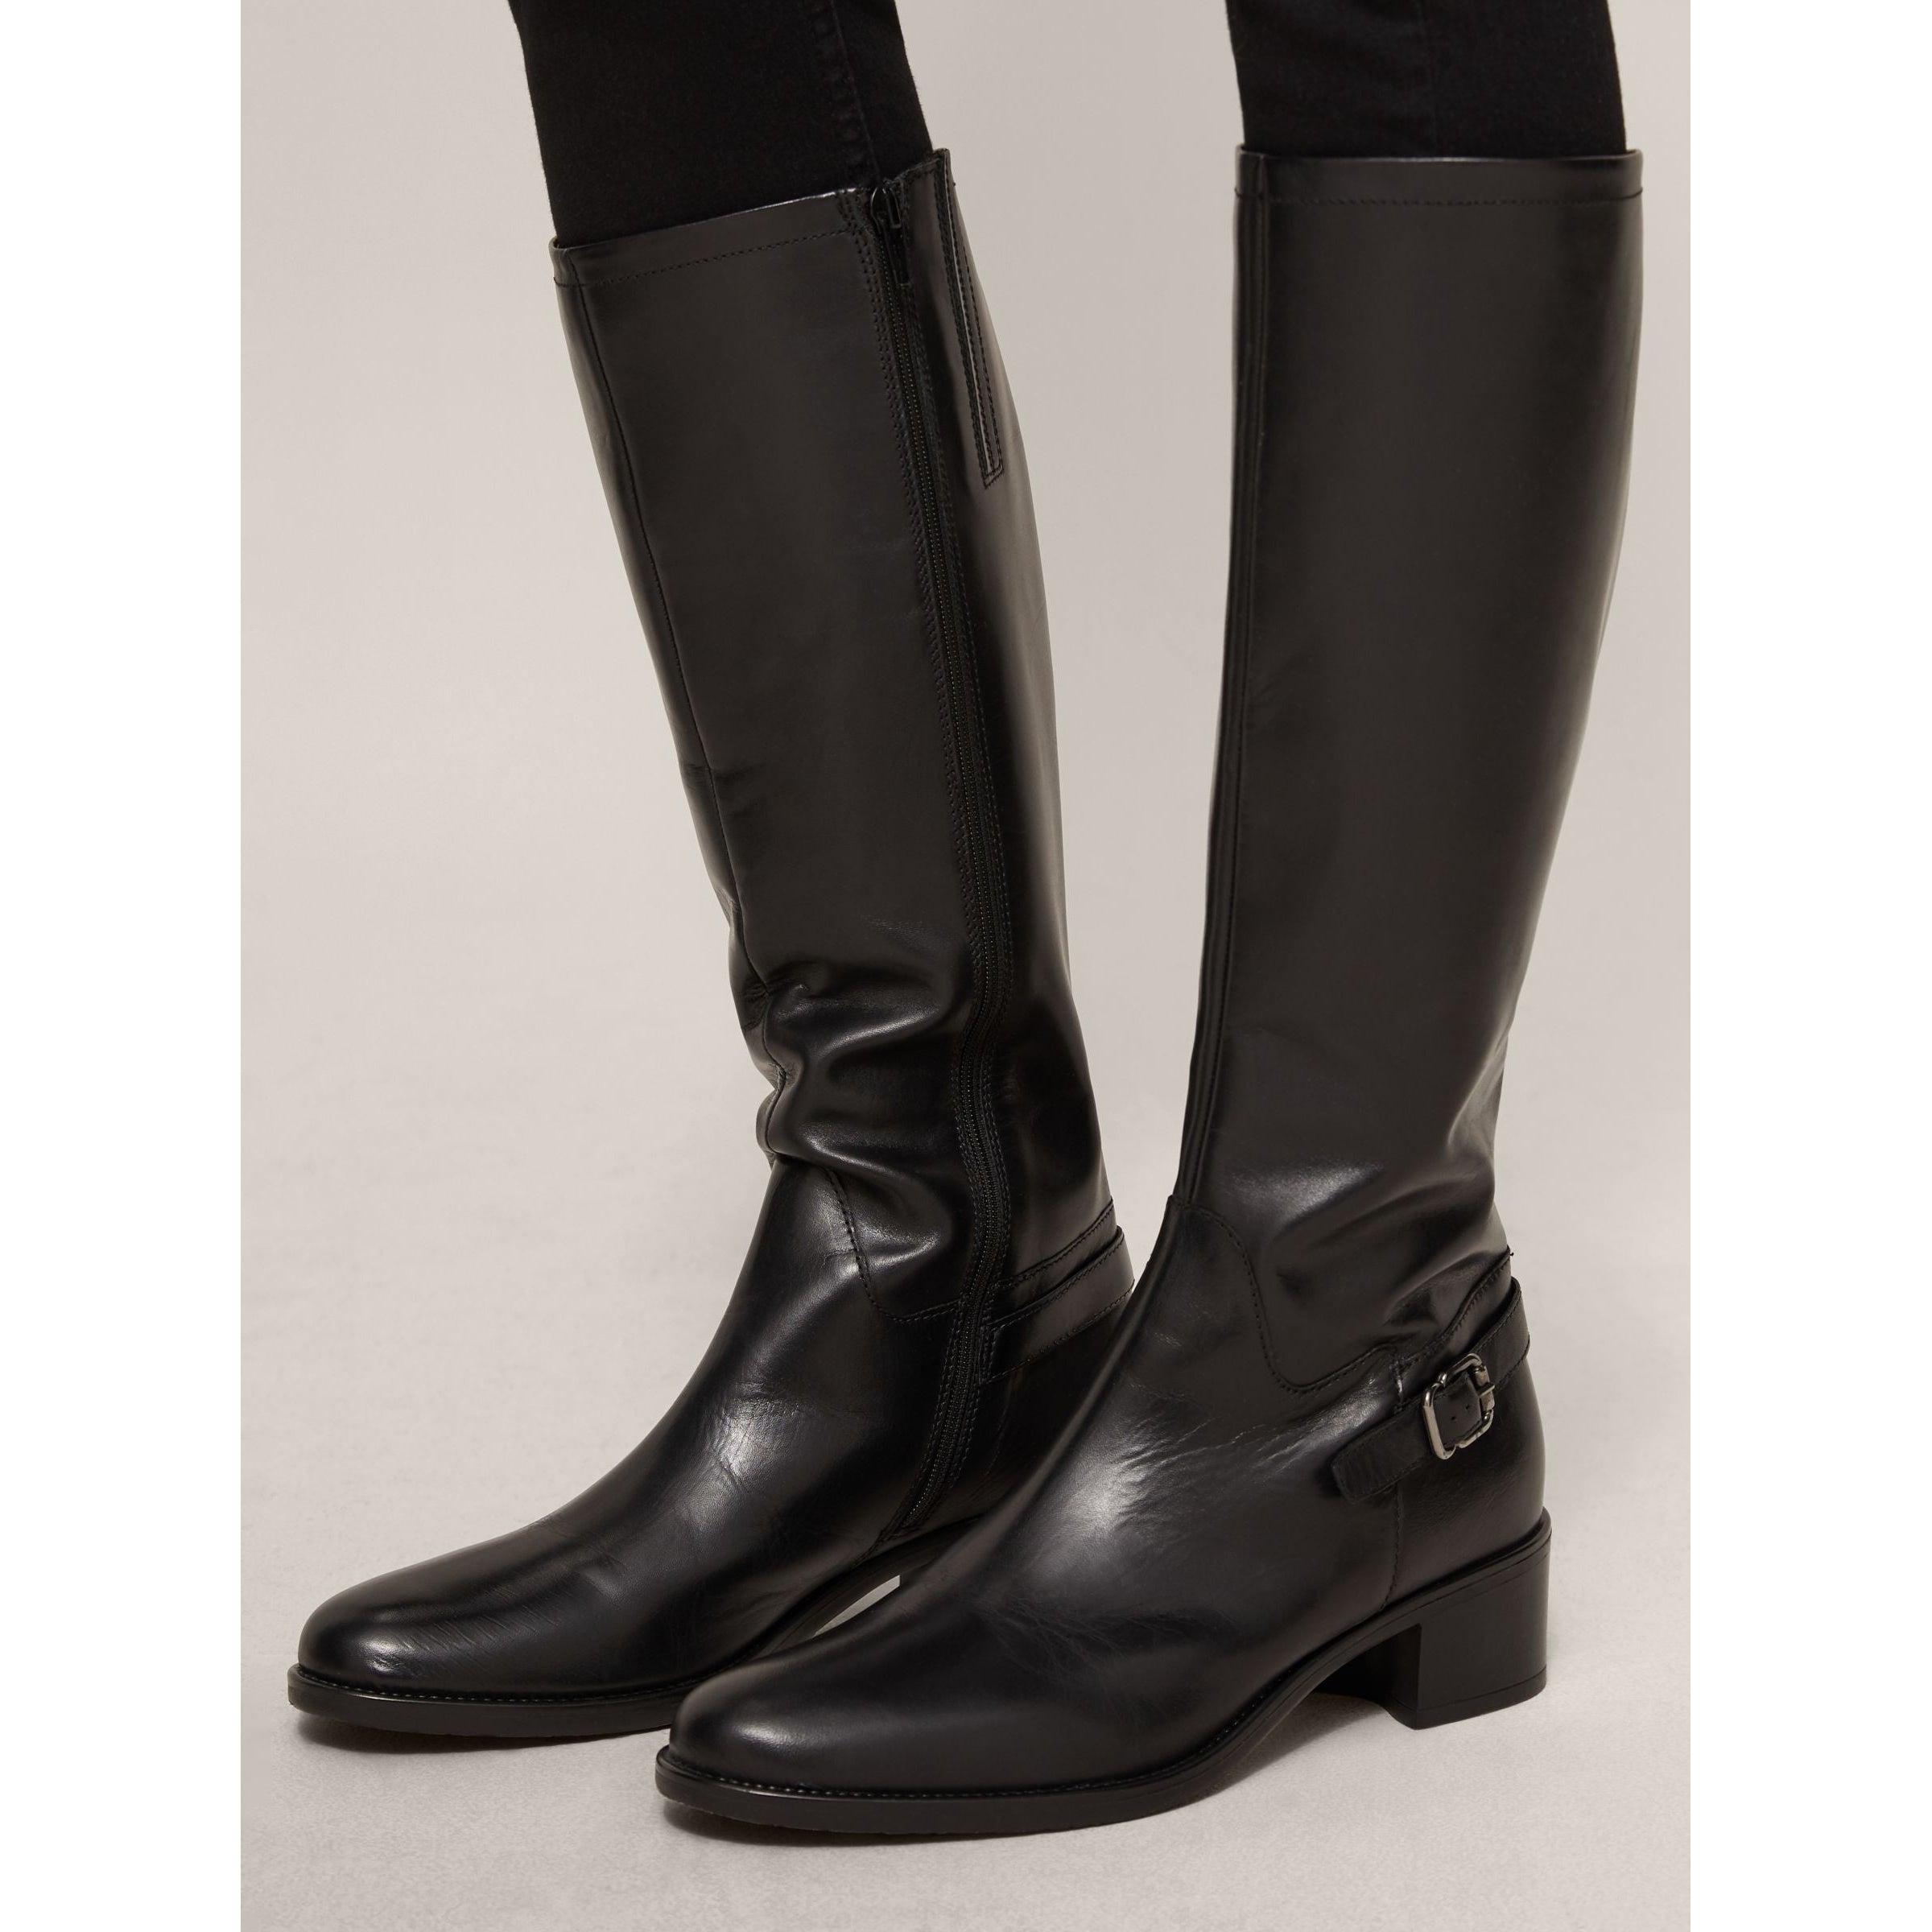 John Lewis & Partners Seattle Slim Block Heeled Leather Calf Boots, Black